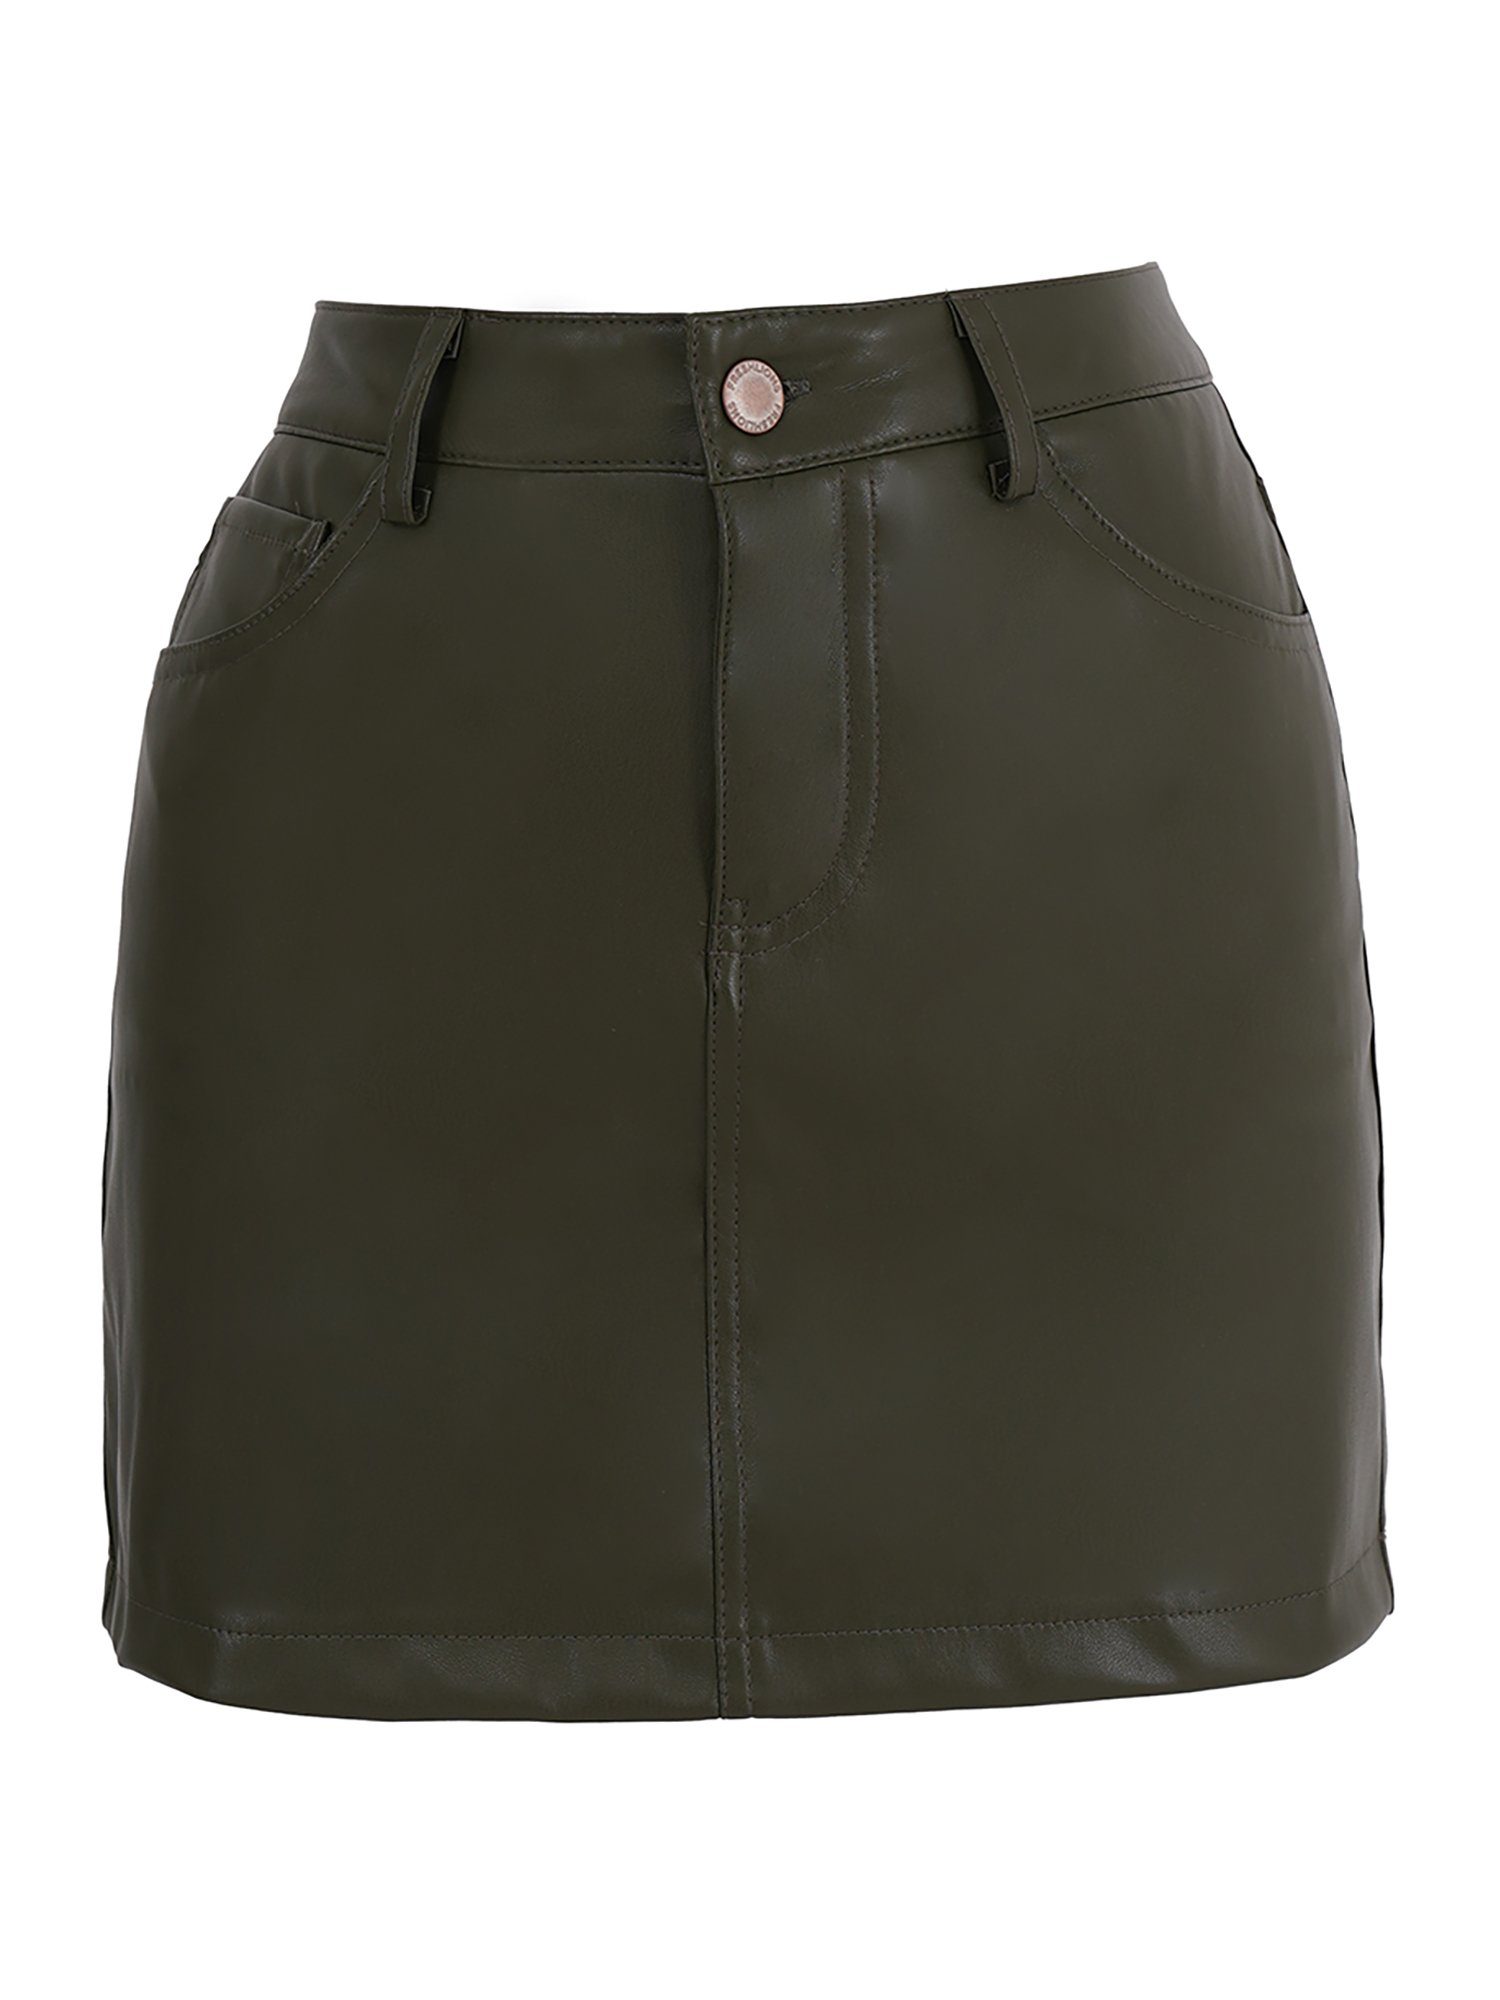 Freshlions grün Freshlions Skirt Lederimitatrock Leather Mini